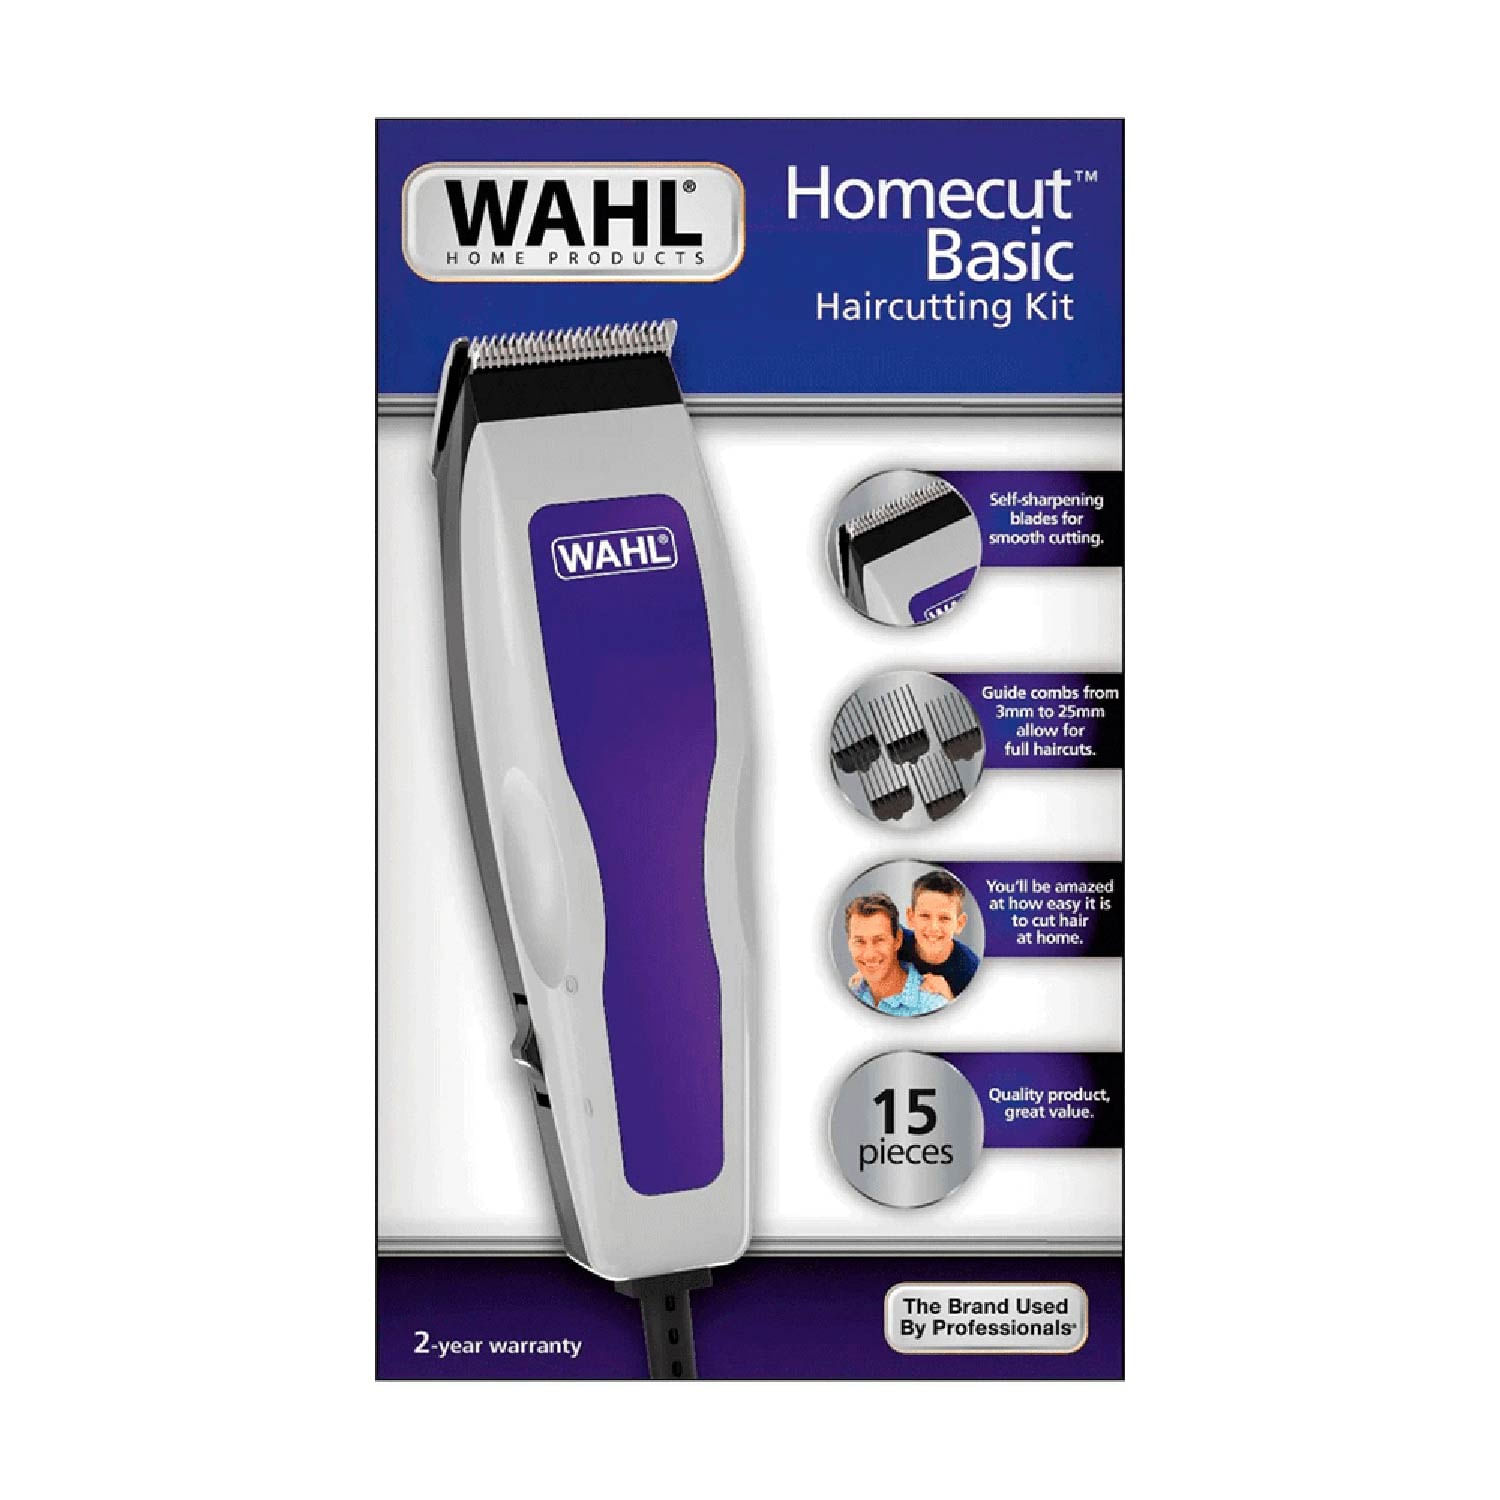 Maquina de Cortar cabello wahl Home Cut Basic 15 piezas.